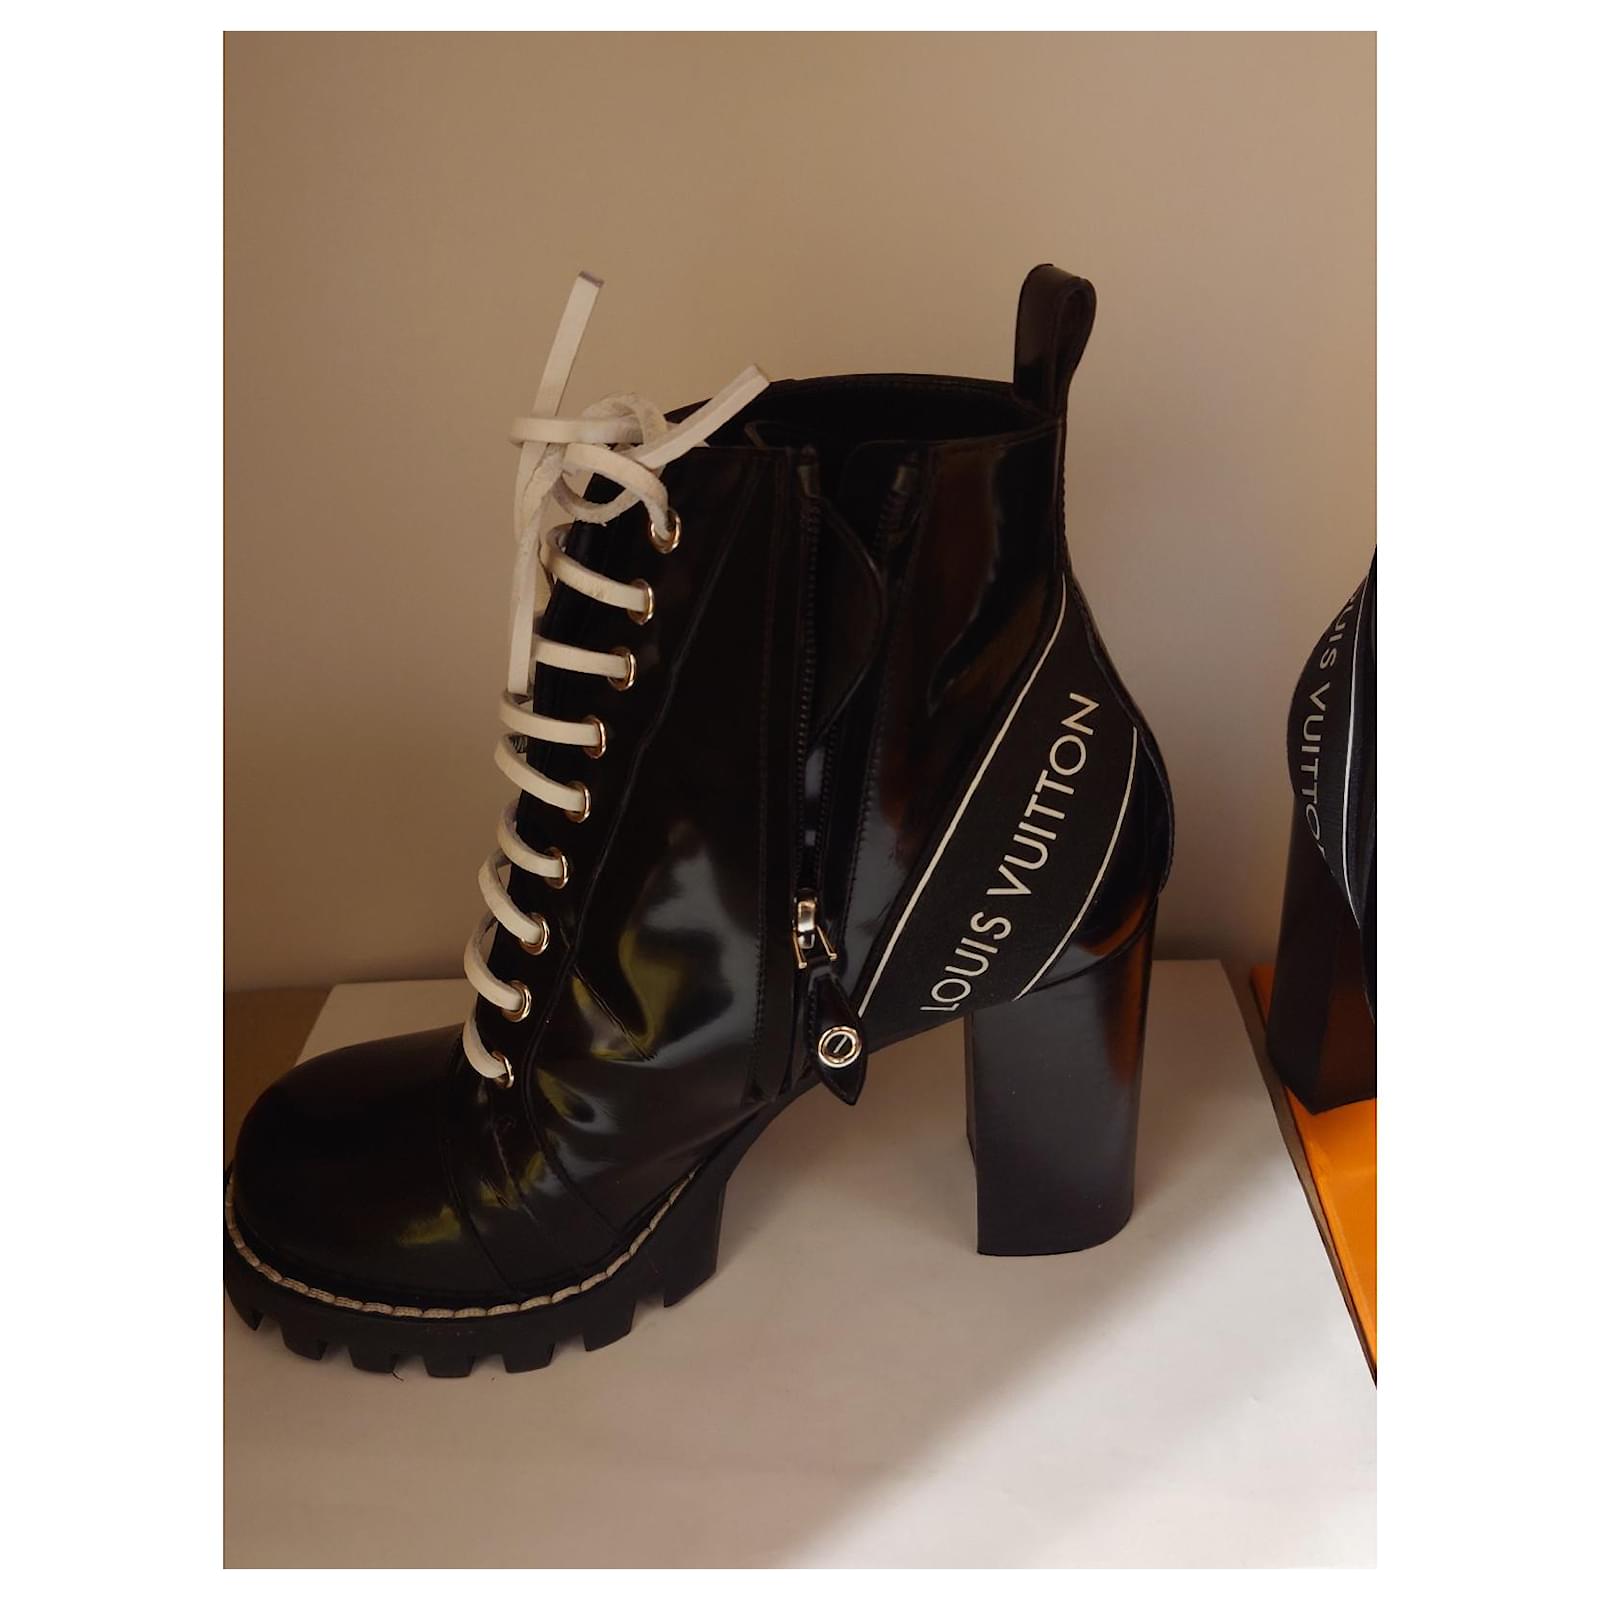 Louis Vuitton Women Silver Black Star Trail Ankle Boot Size 39 US 9 UK/AU 6